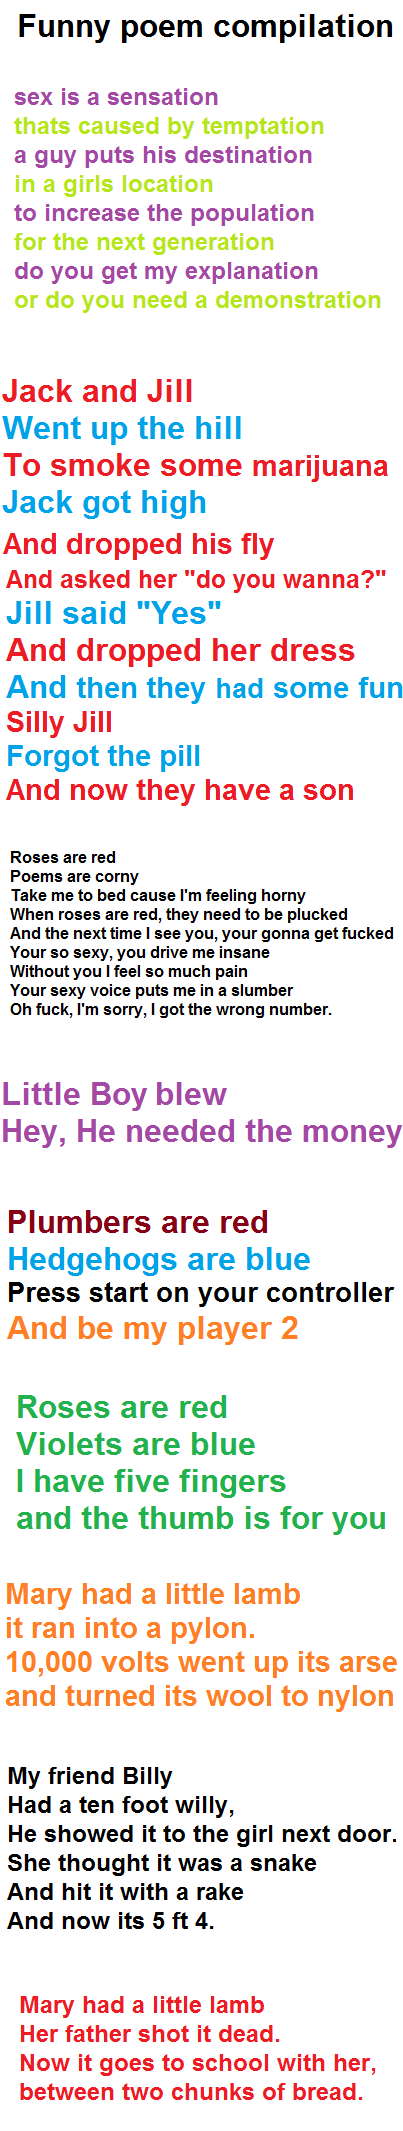 Funny Nursery Rhymes